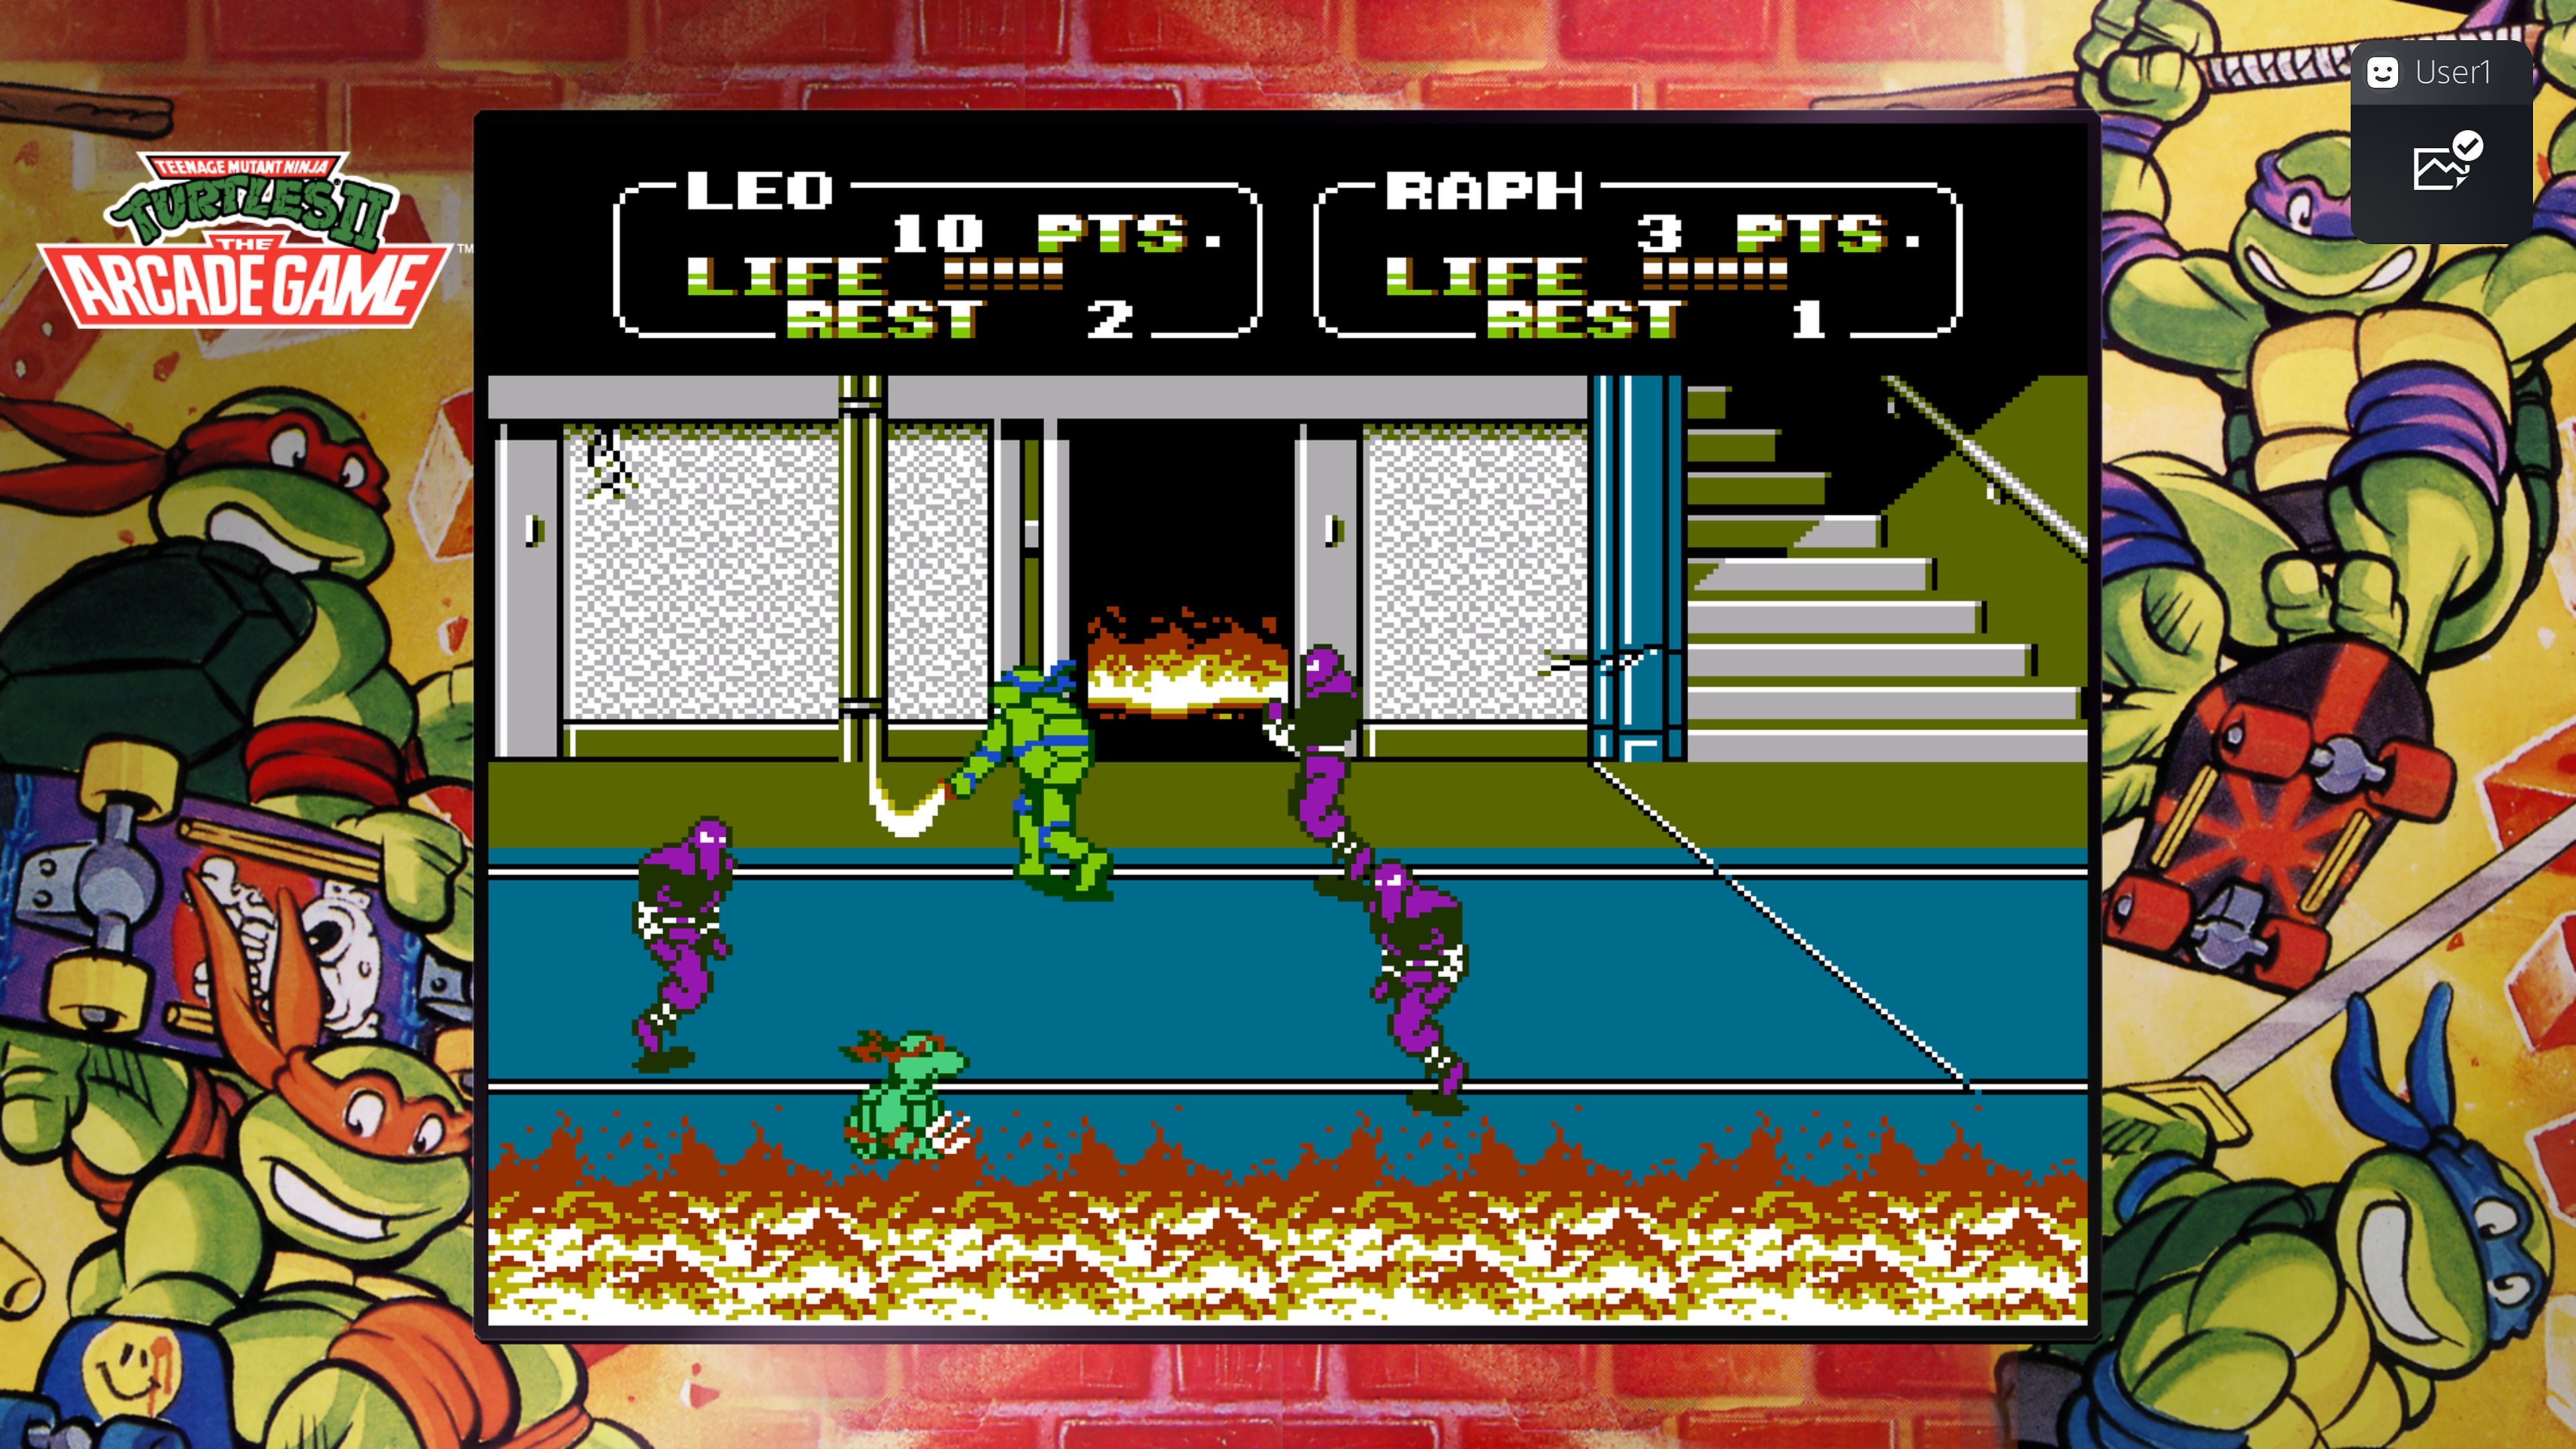 Kolekce Teenage Mutant Ninja Turtles – screenshot ze hry The Arcade Game, kde bojují Leonardo a Rafael s klanem Foot